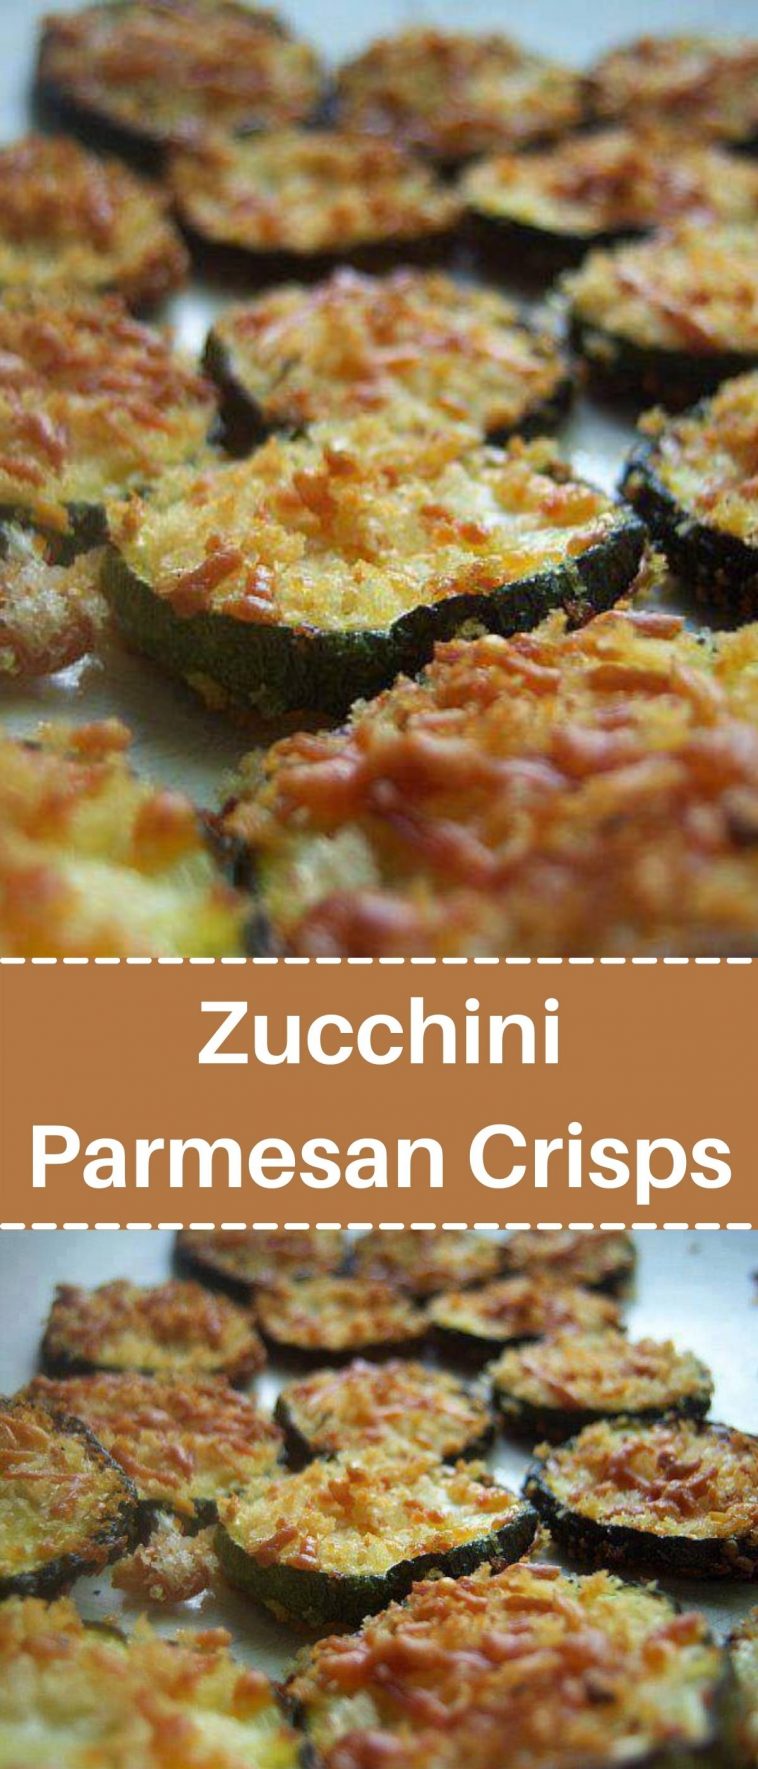 Zucchini Parmesan Crisps